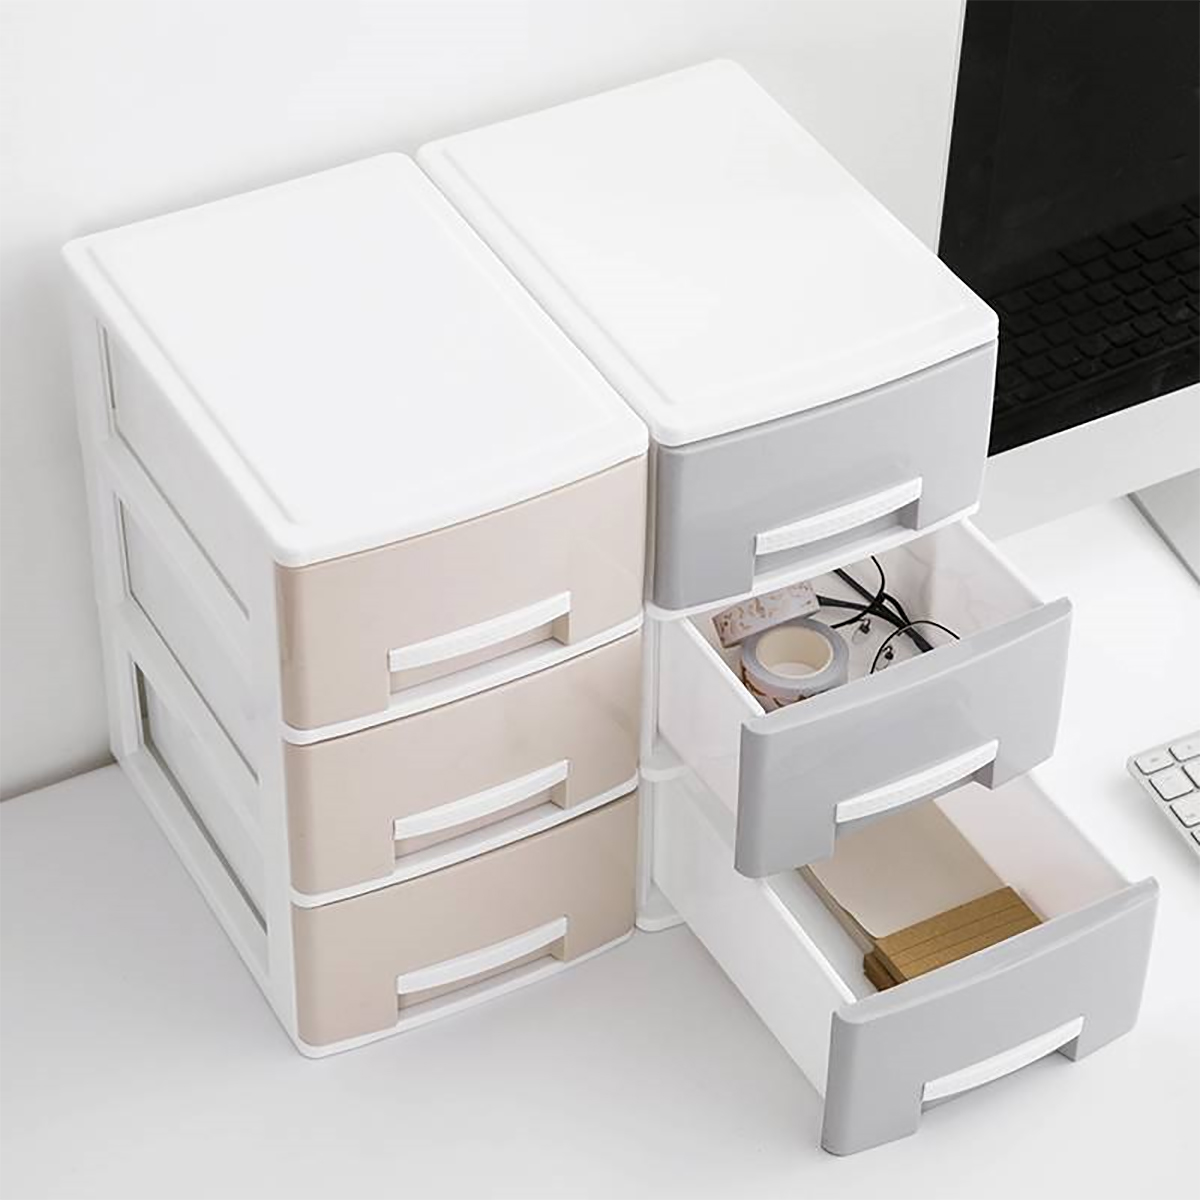 

Mini Home Desk Neat Desktop Drawer Makeup Jewelry Necklace Box Storage Desktop Organizer